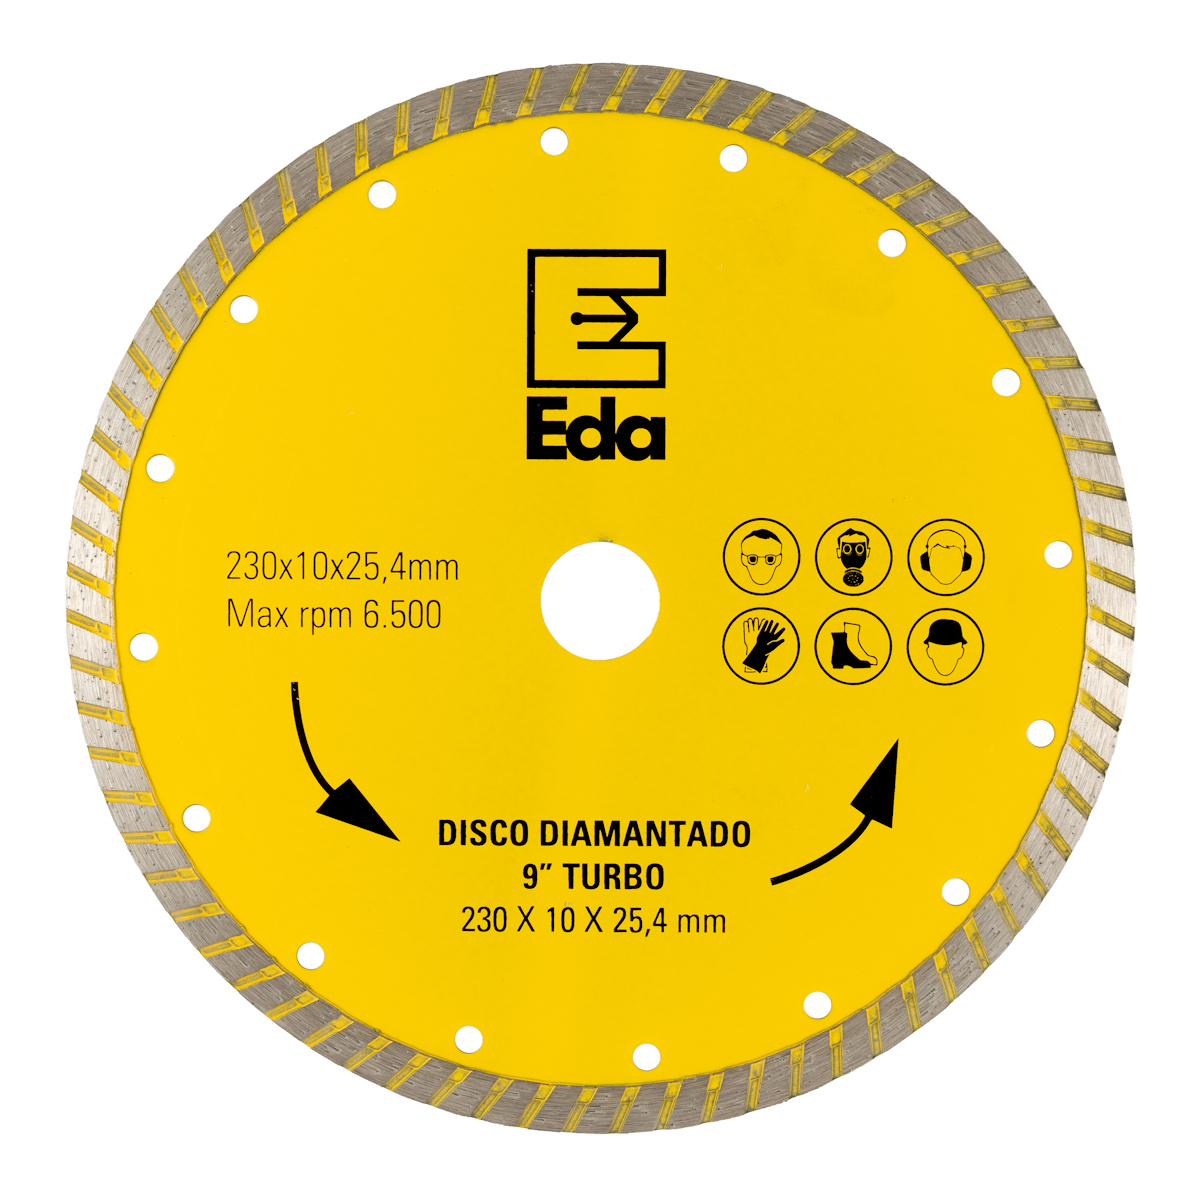 Disco Diamantado 9″ Turbo 230 x 10 x 25,4 mm